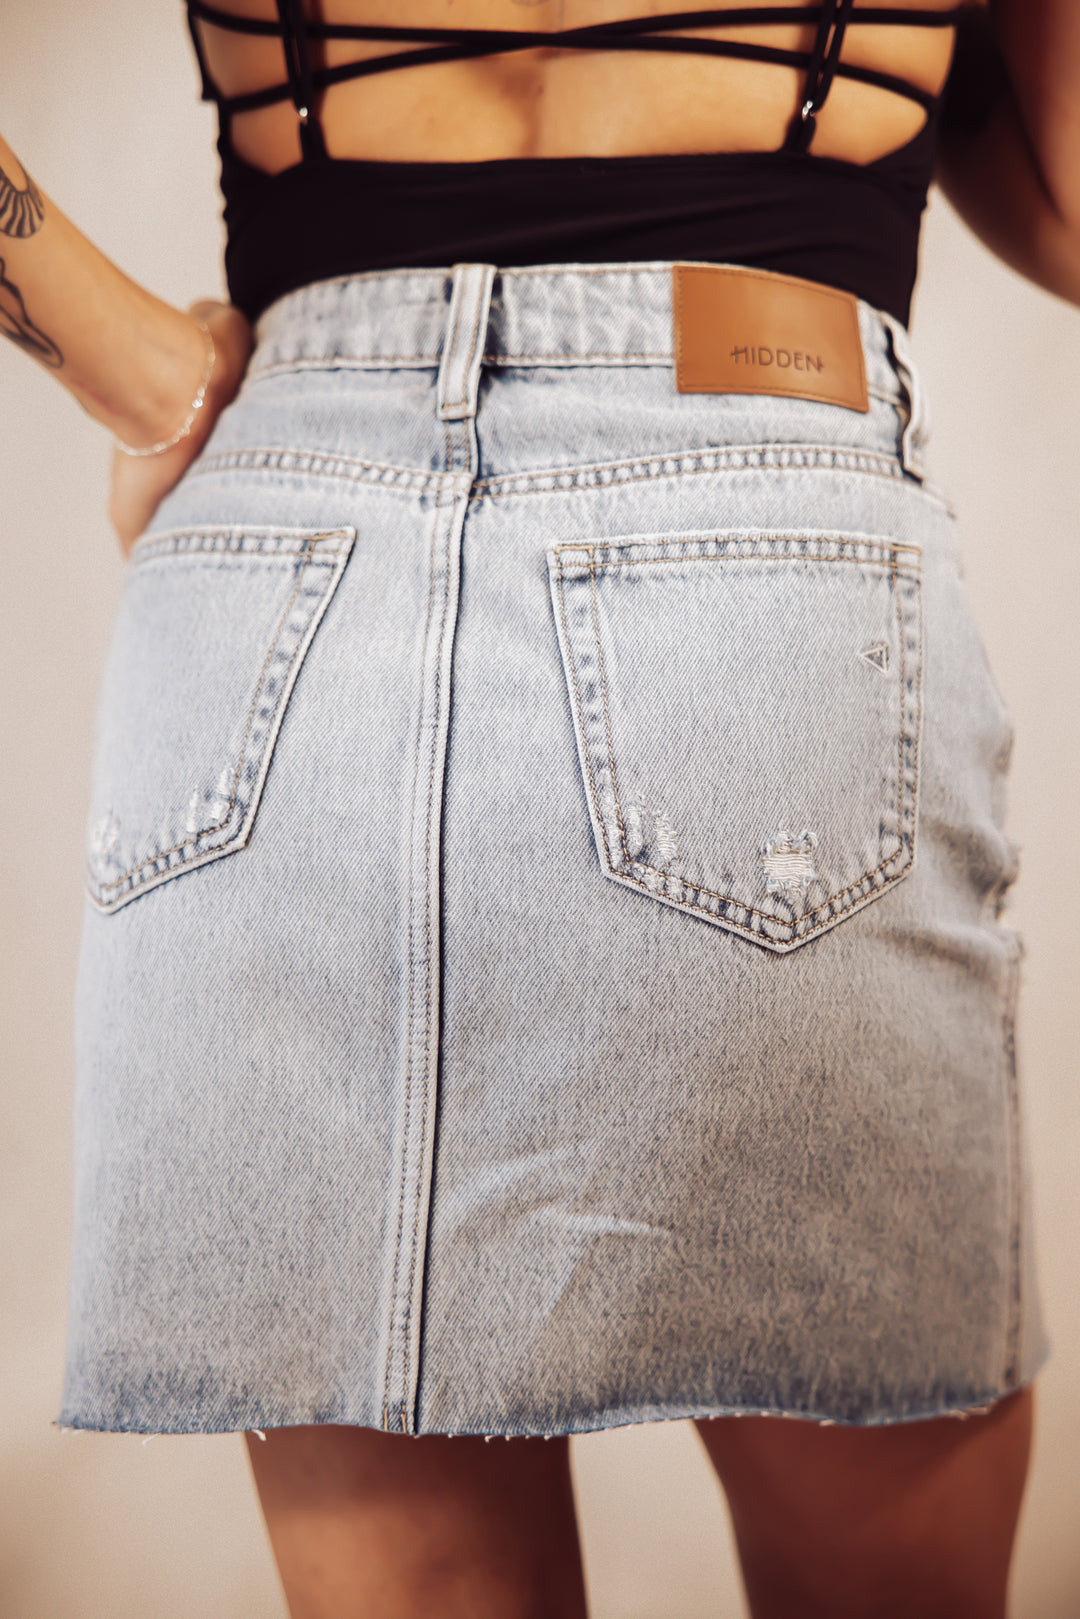 Hidden Jeans Peyton Mini Denim Skirt